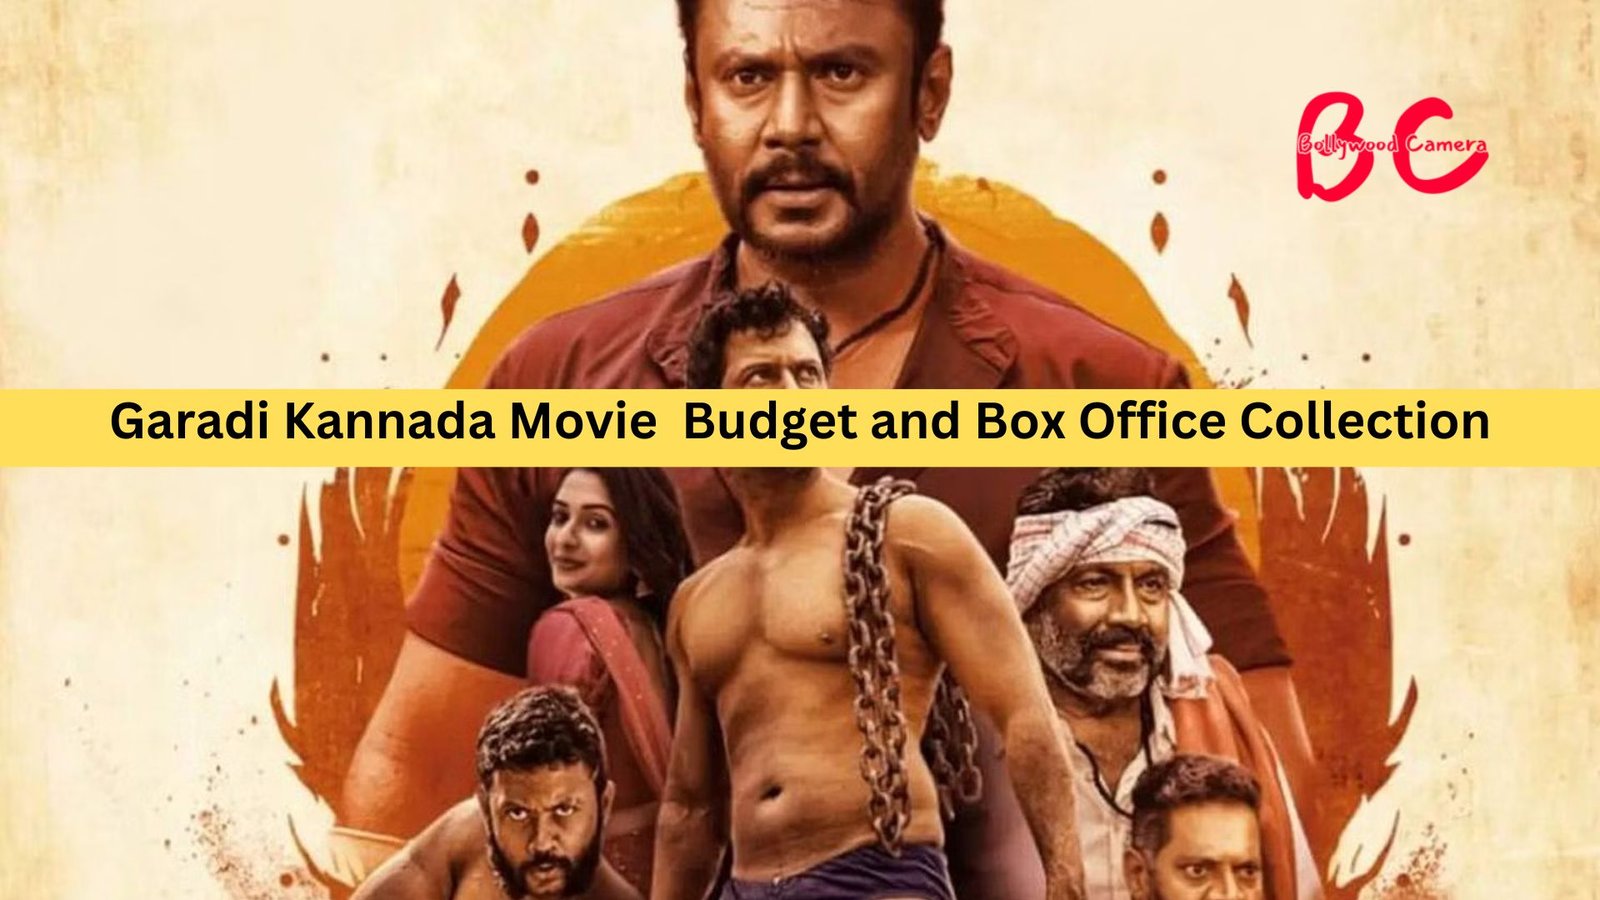 Garadi Kannada Movie Budget and Box Office Collection